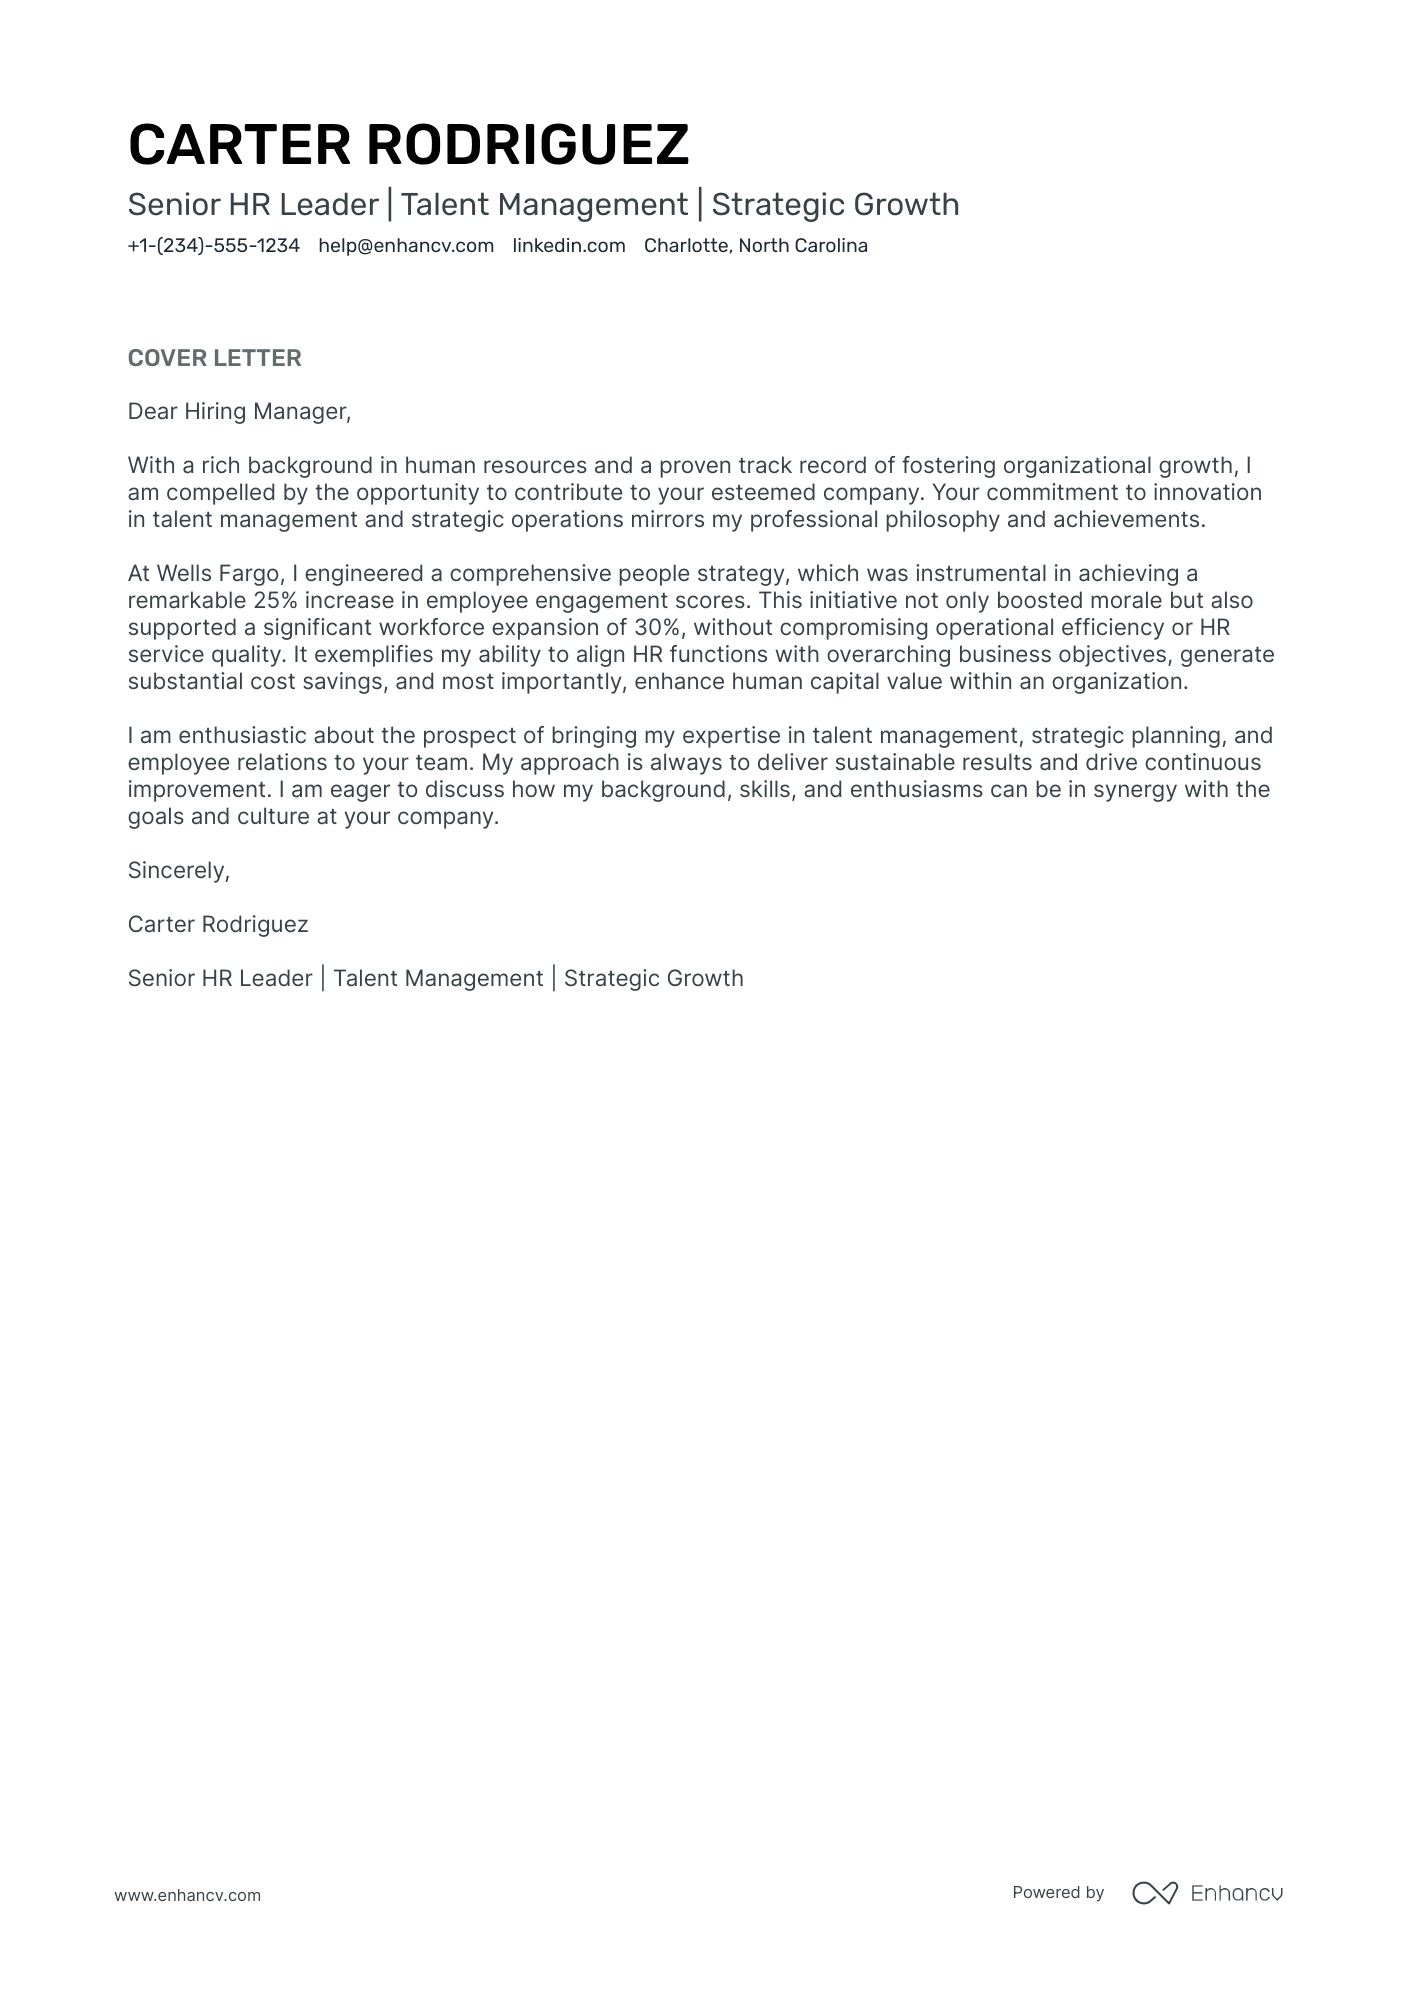 HR Director cover letter